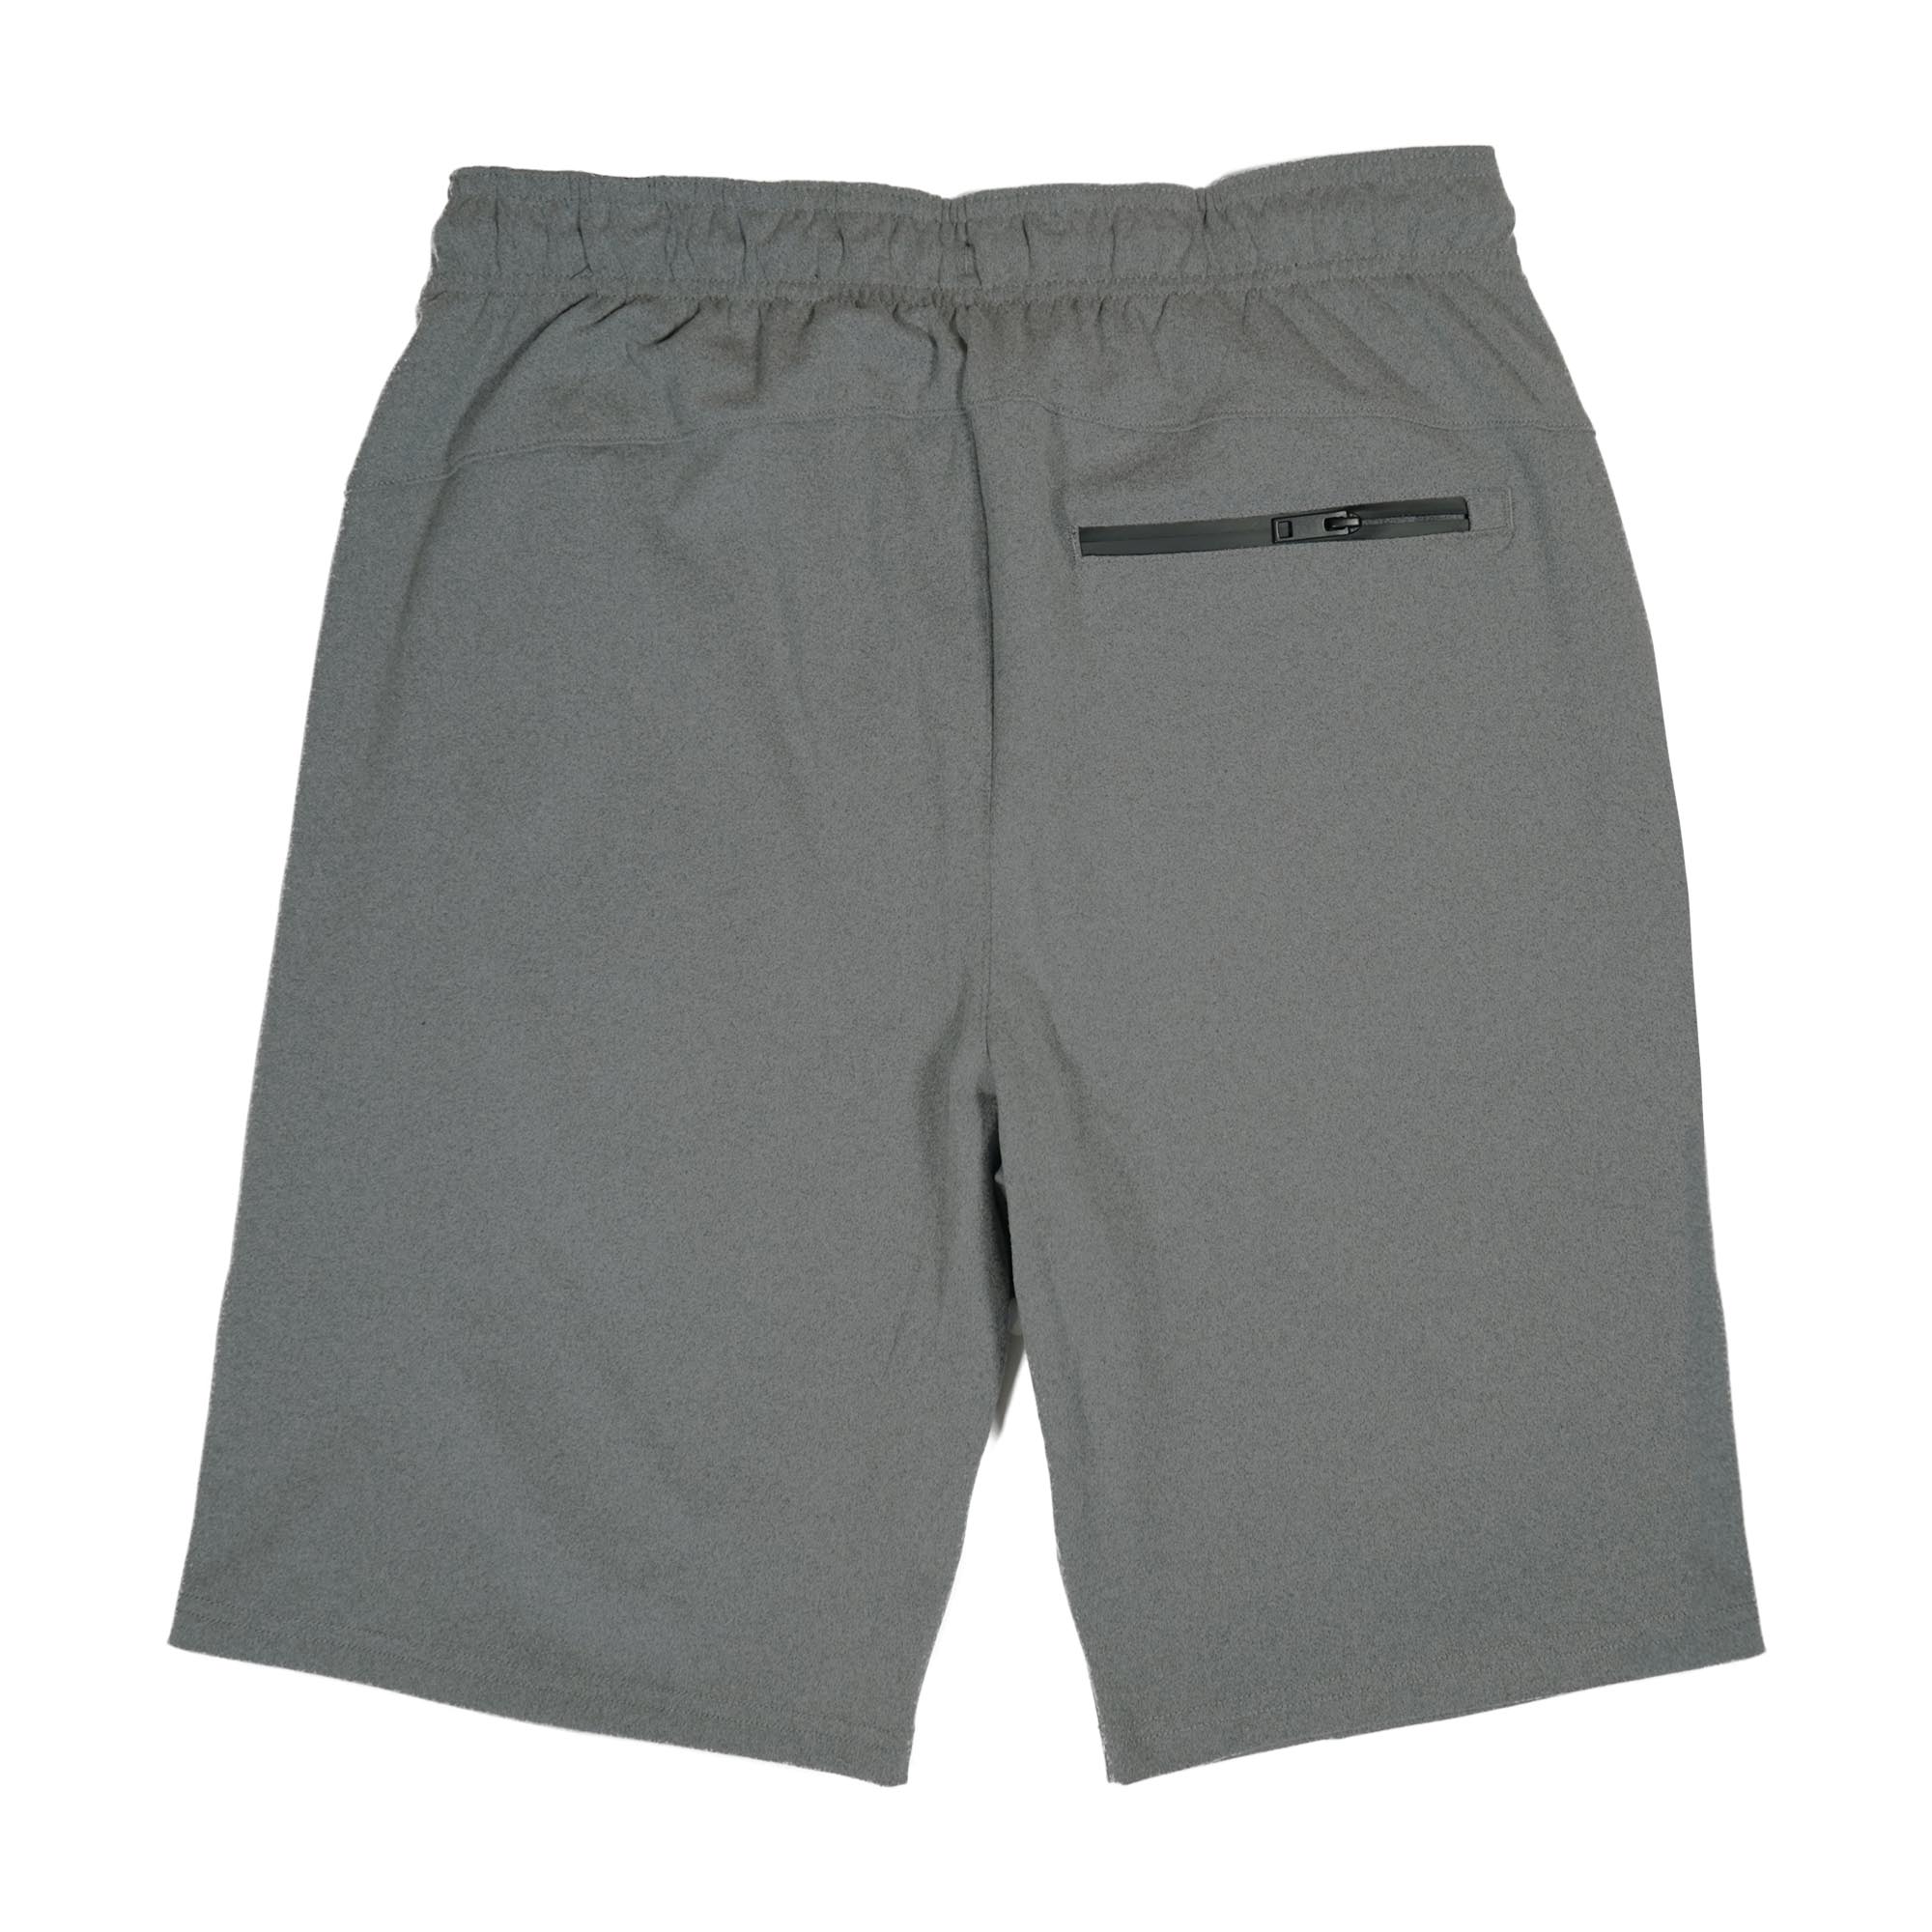 Lazy Daze Grey Shorts back facing